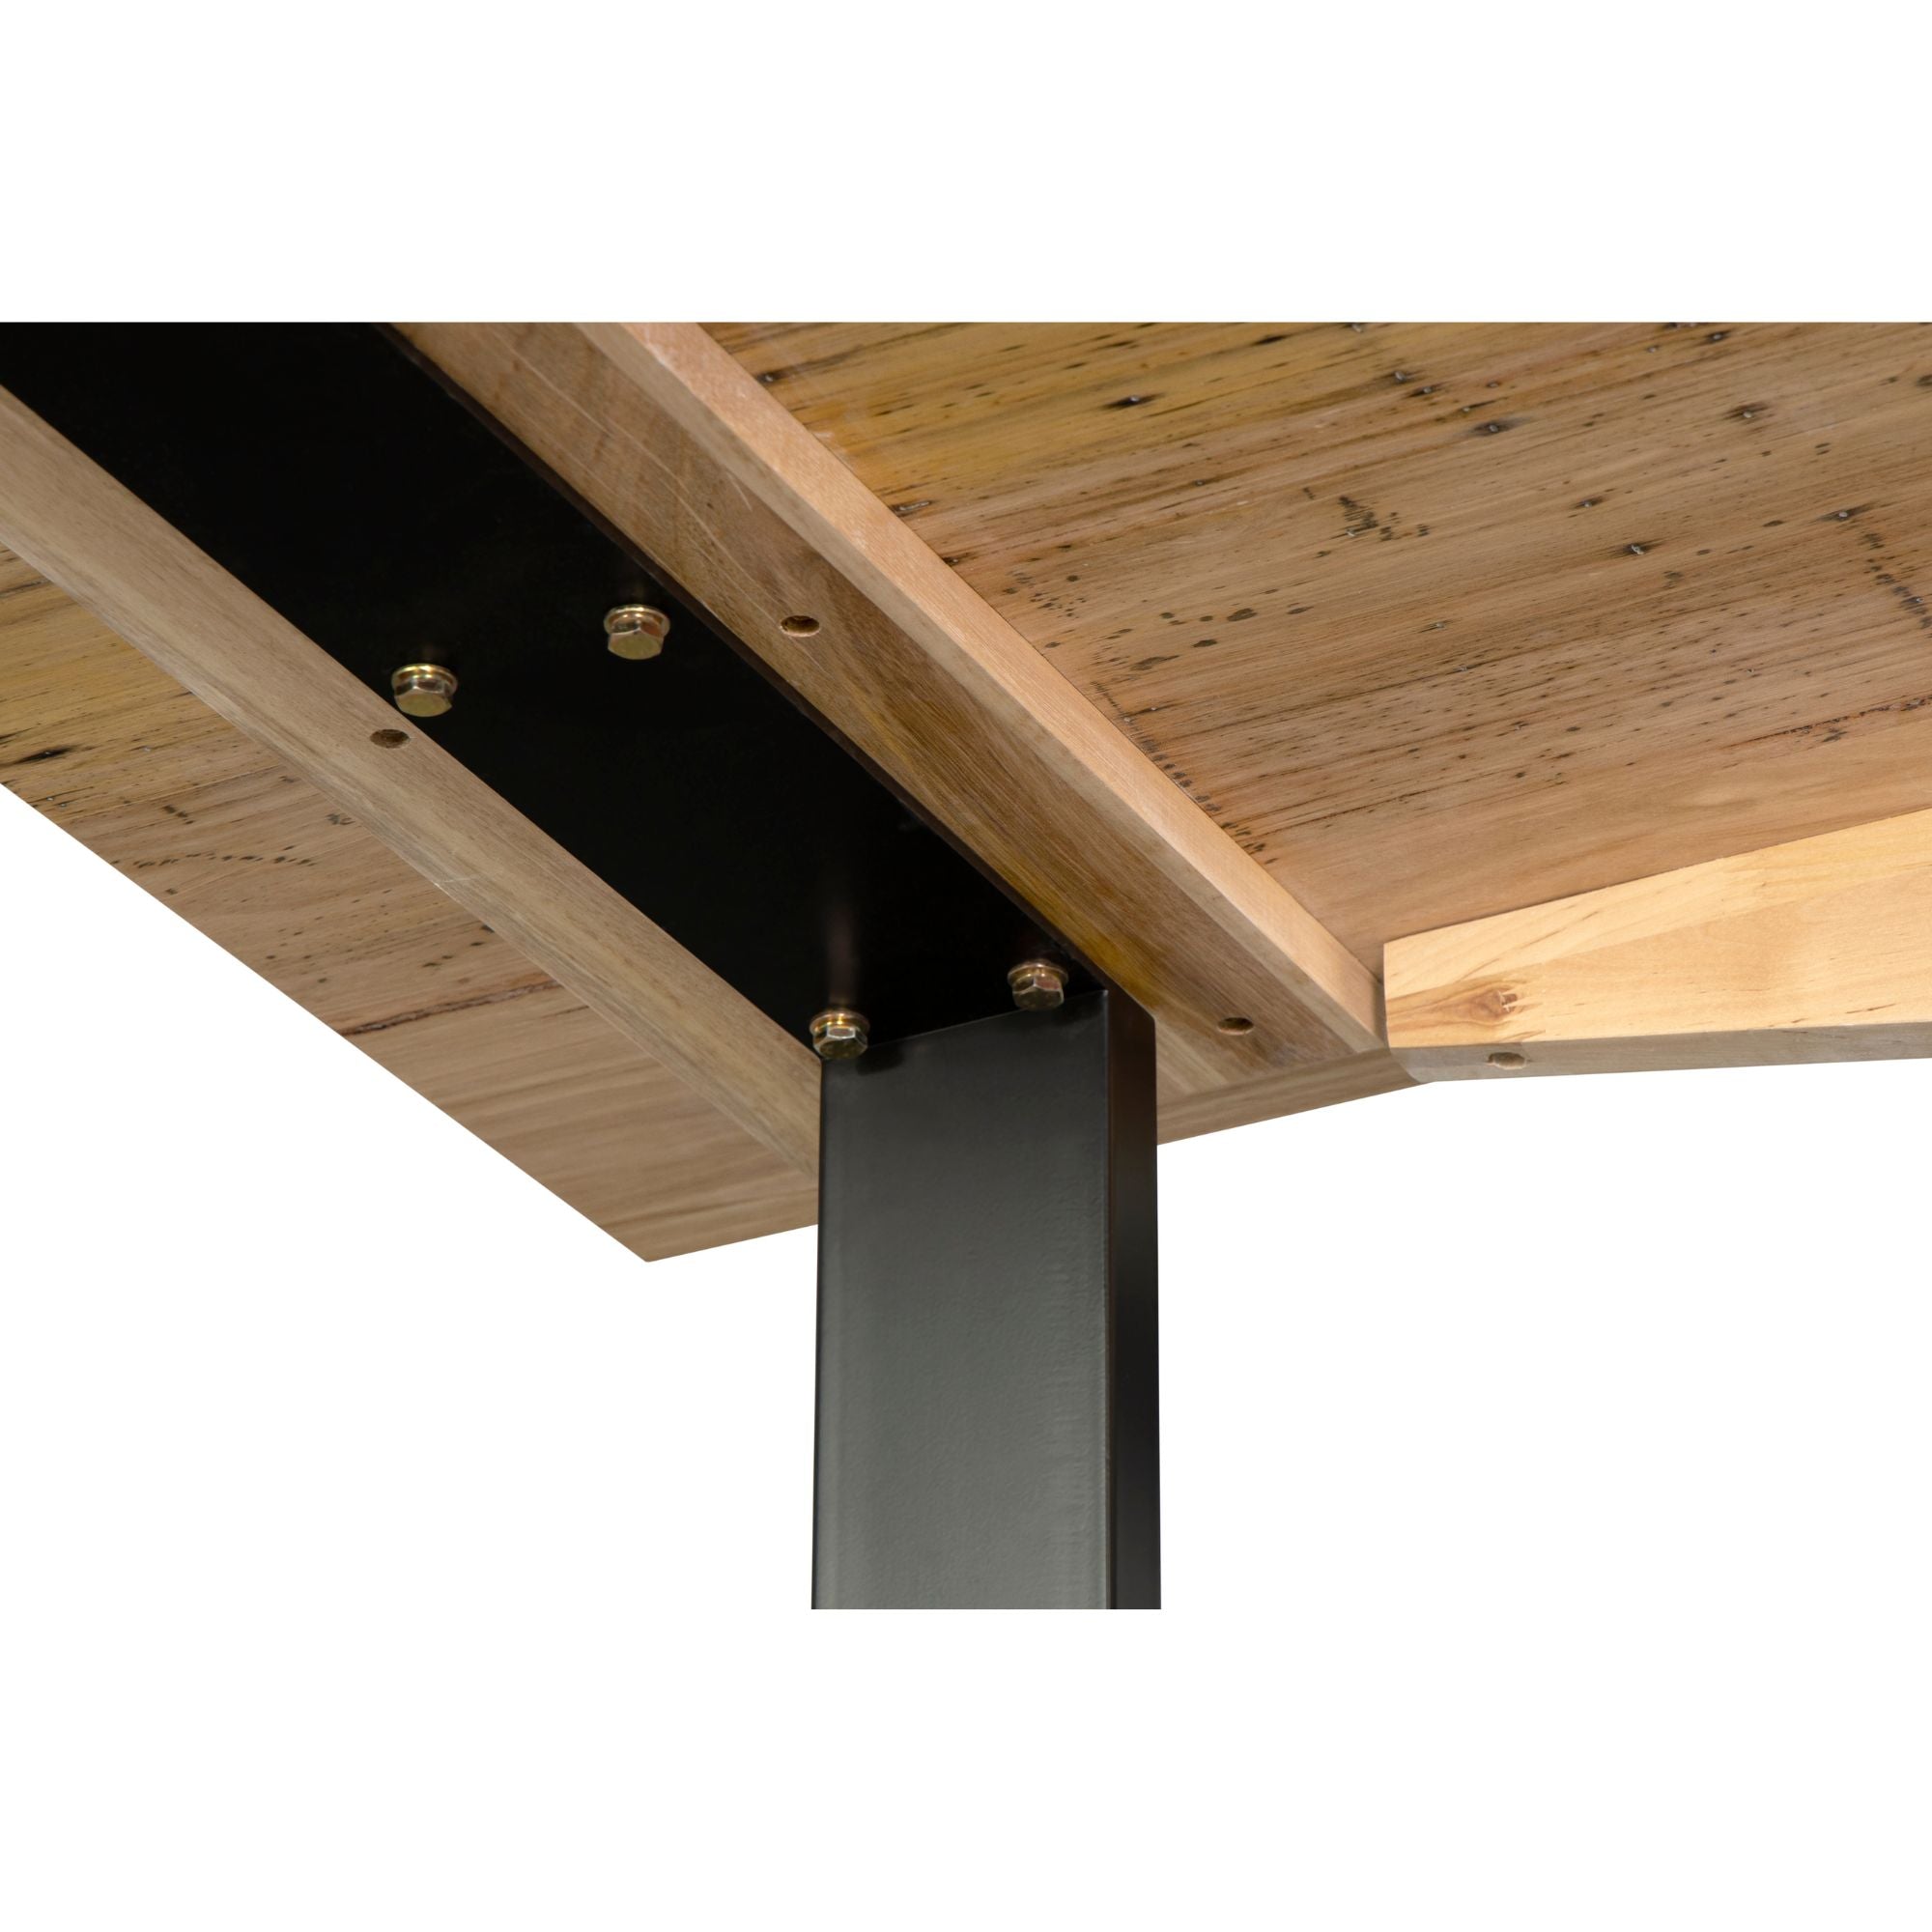 Aconite Dining Table 180cm Solid Messmate Timber Wood Black Metal Leg - Natural